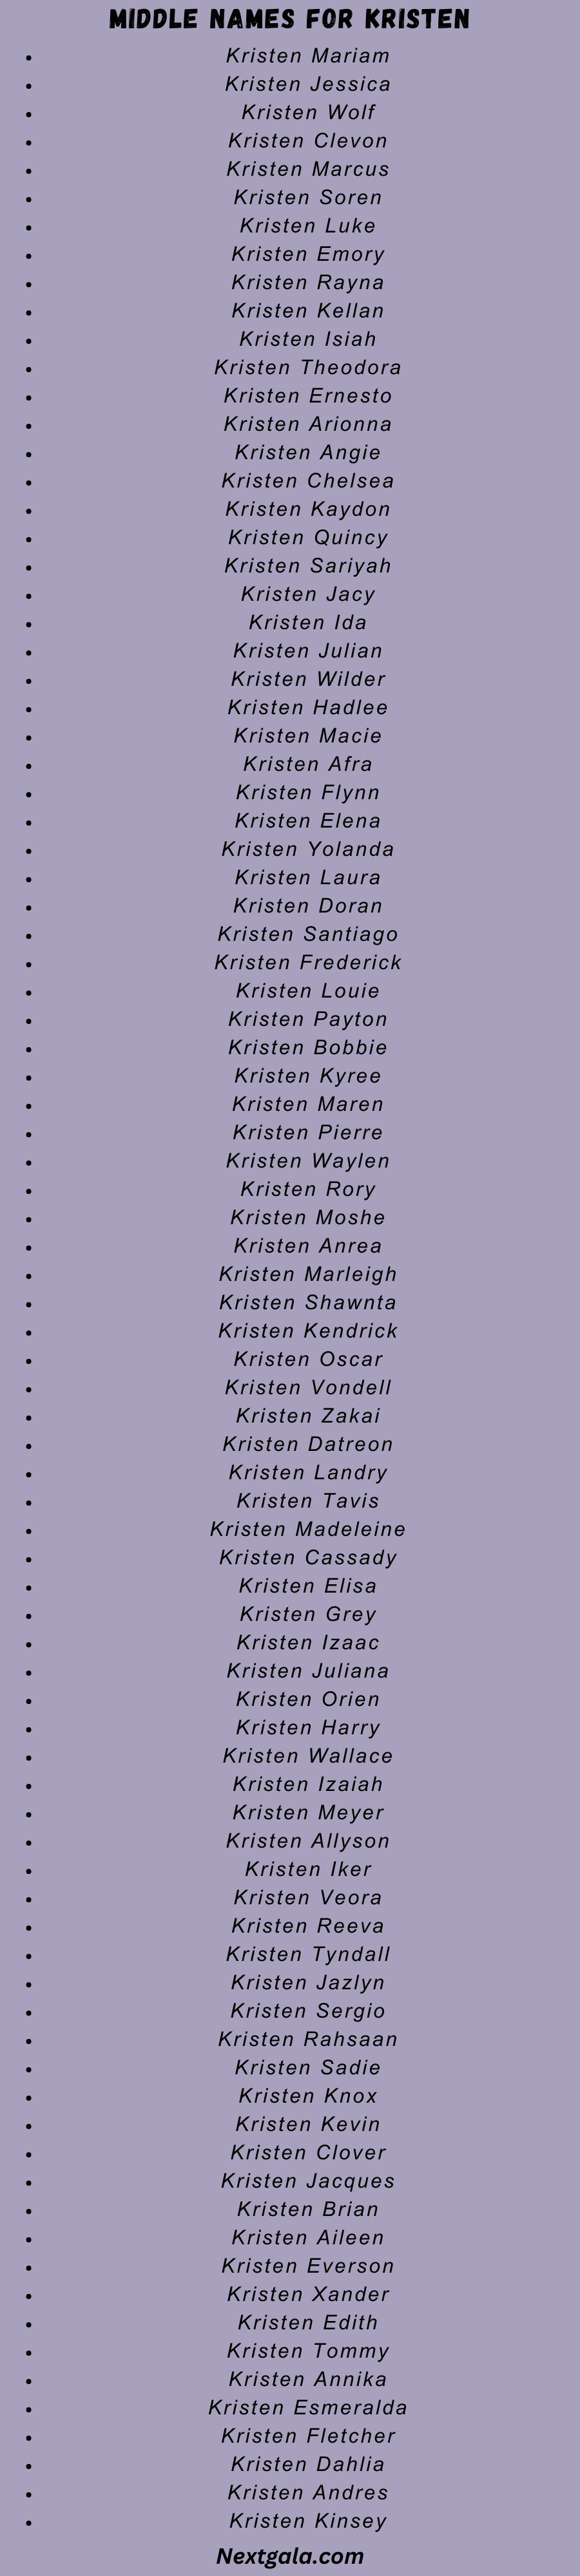 Middle Names for Kristen